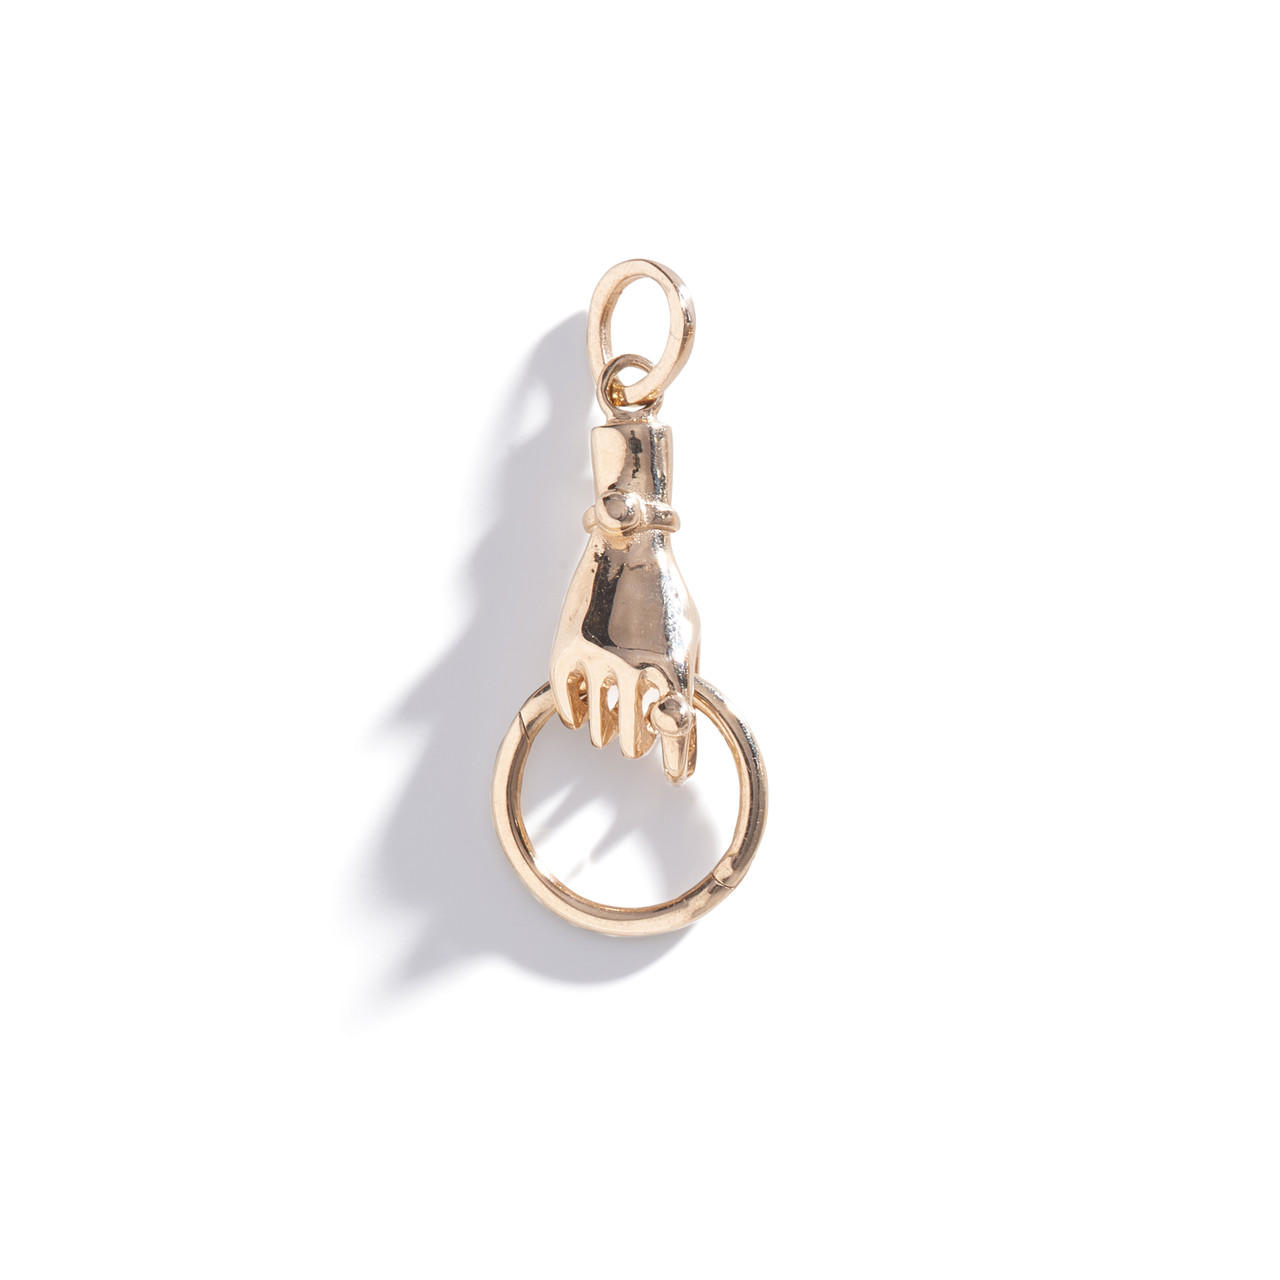 Unique VINTAGE Padlock Wrap Around Chain Necklace, Louis Vuitton Lock and  Key, Convertible Necklace